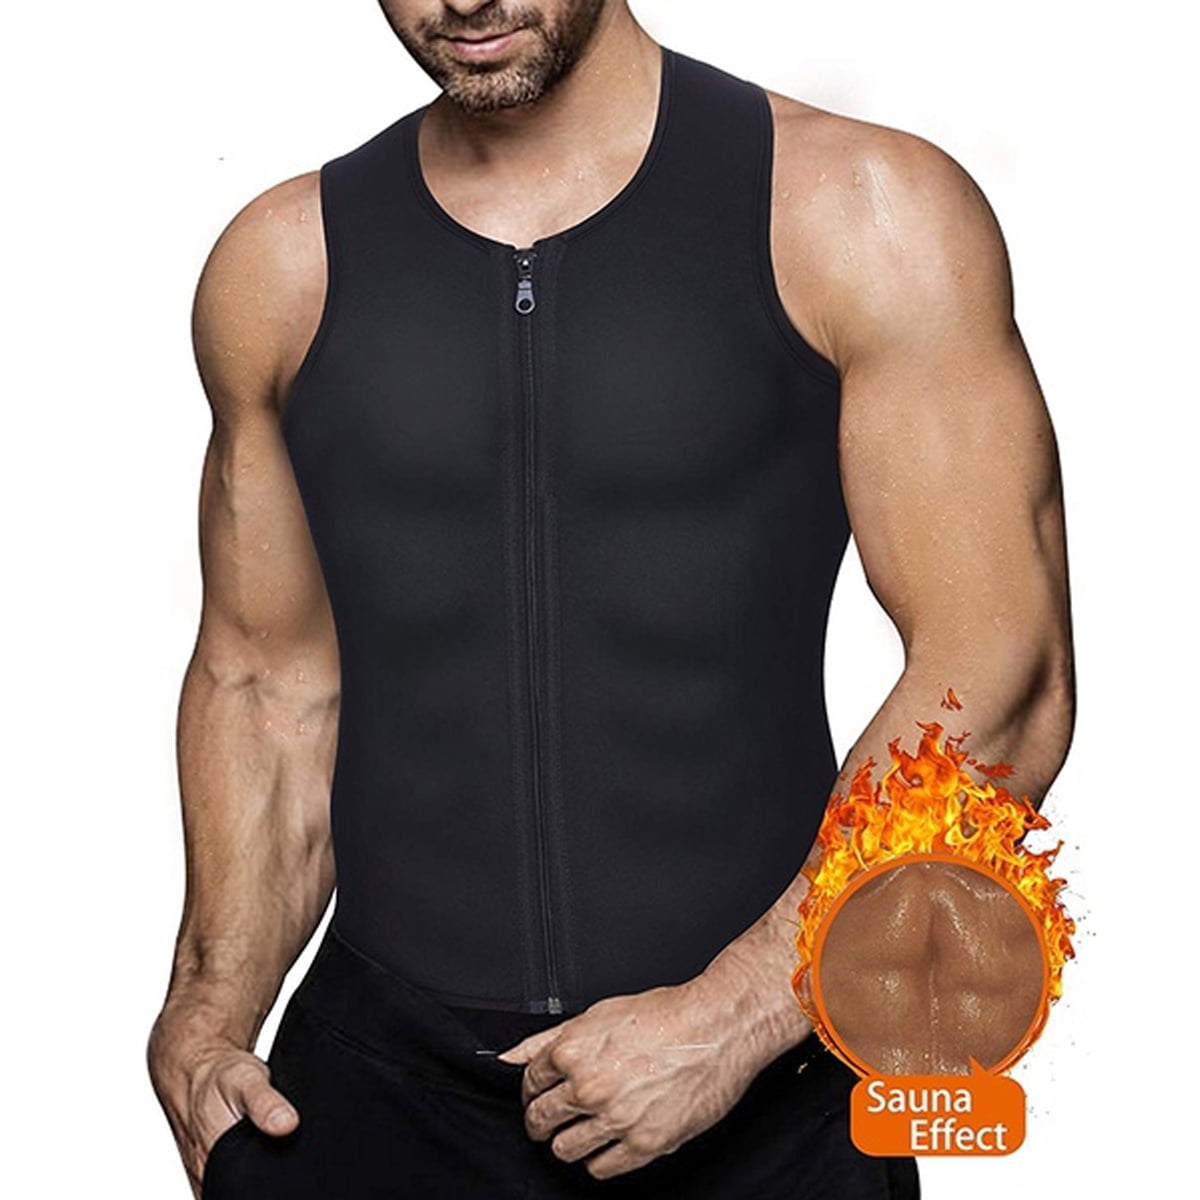 Hot Sauna Sweat Suits,Zipper Closure Tank Top Shirt for Weight Lost,Waist Trainer Vest Slim Belt Workout Fitness-Breathable 